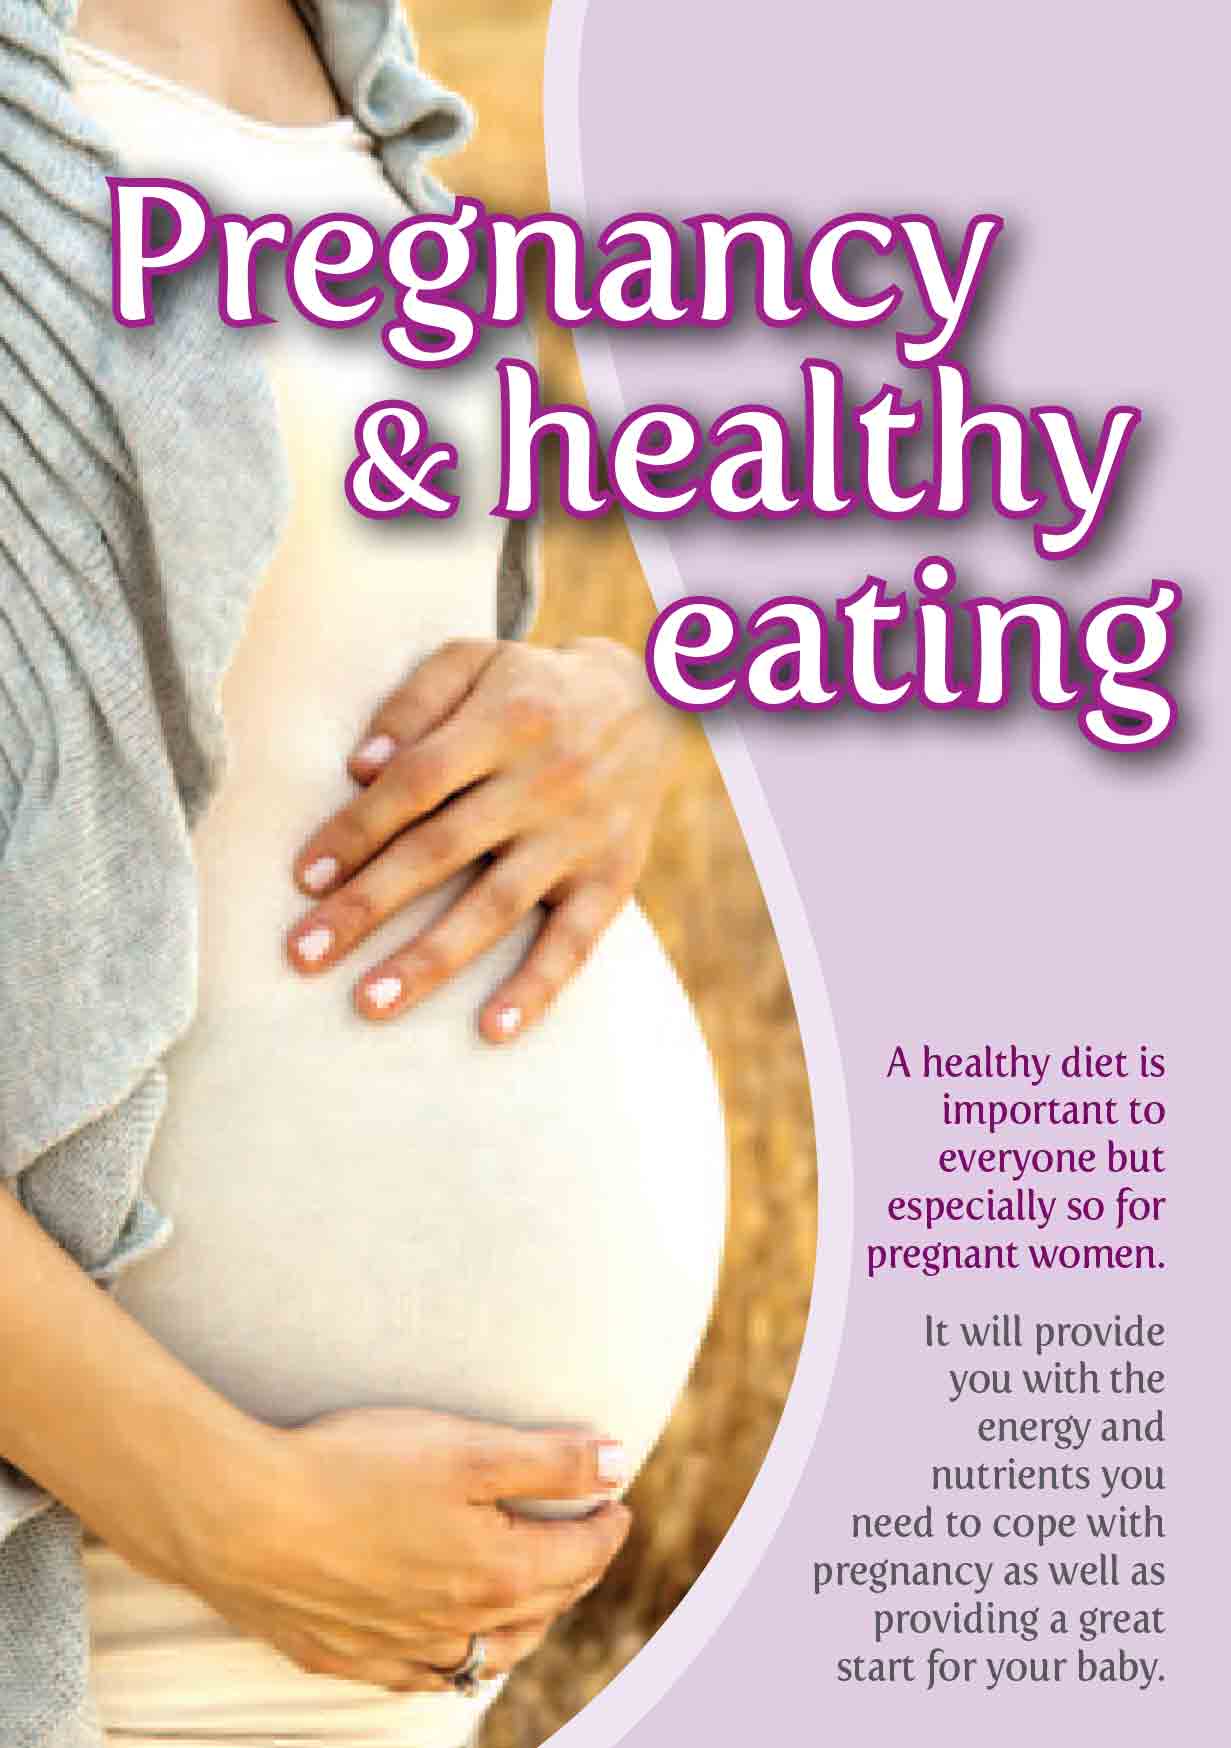 Pregnancy &amp; healthy eating